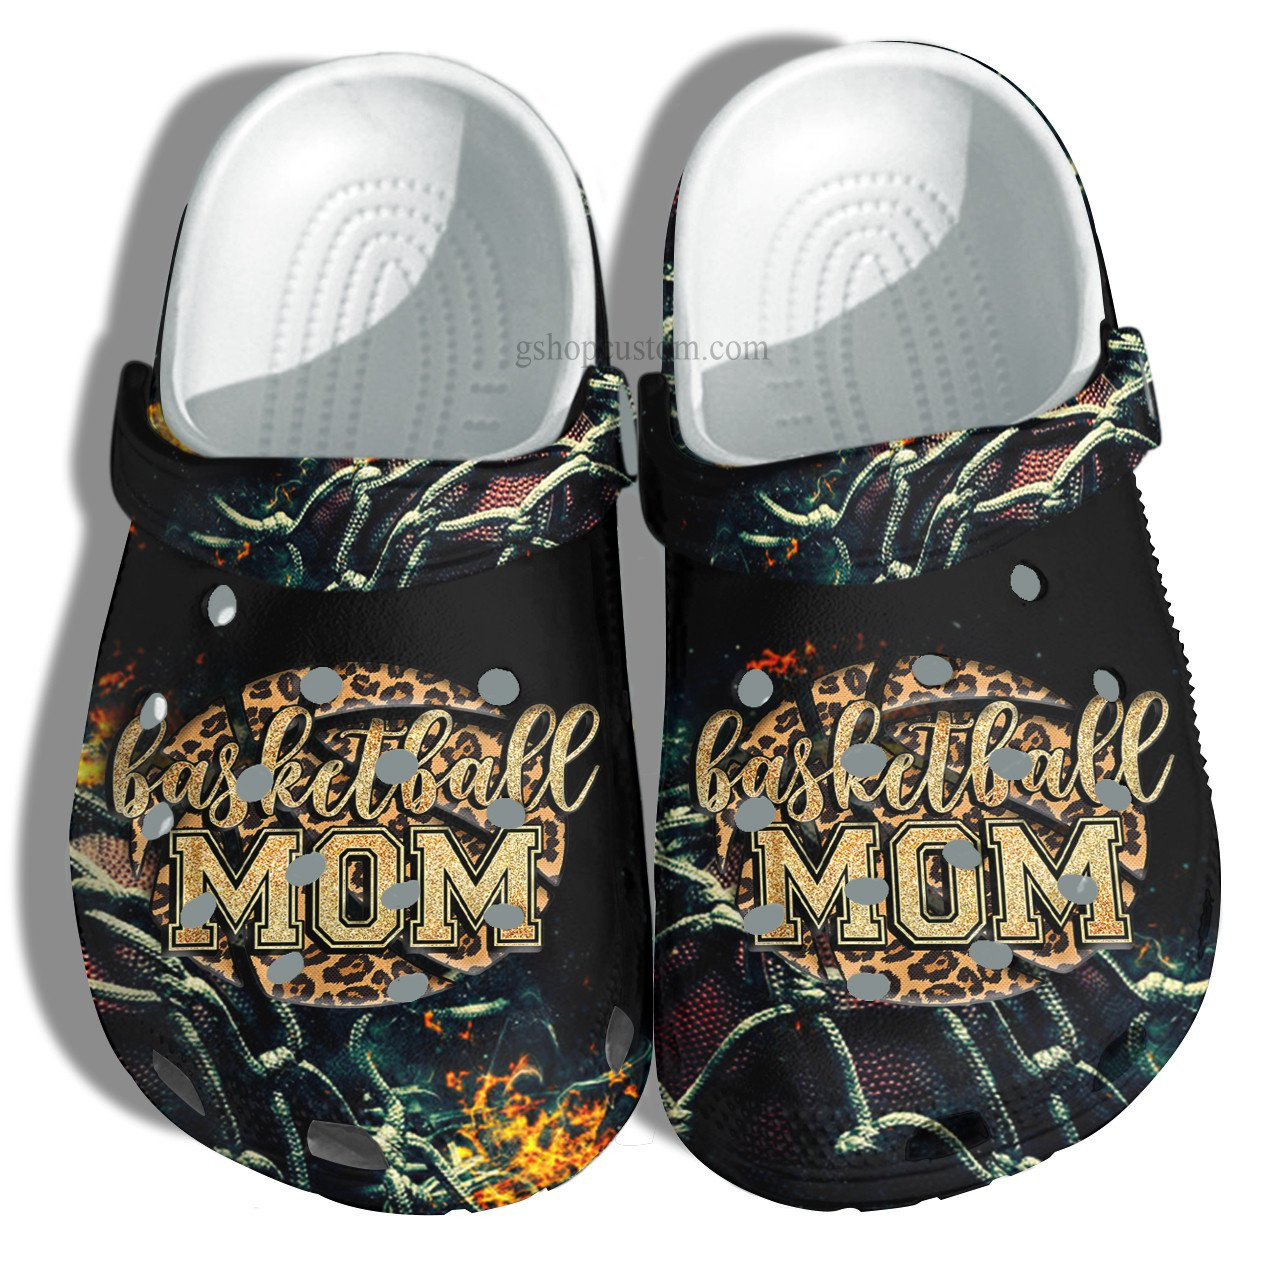 Basketball Mom Cool Women Croc Shoes Gift Grandma – Basketball Cheer Up Son Player Mom Crocs Shoes Gift Mommy Birthday